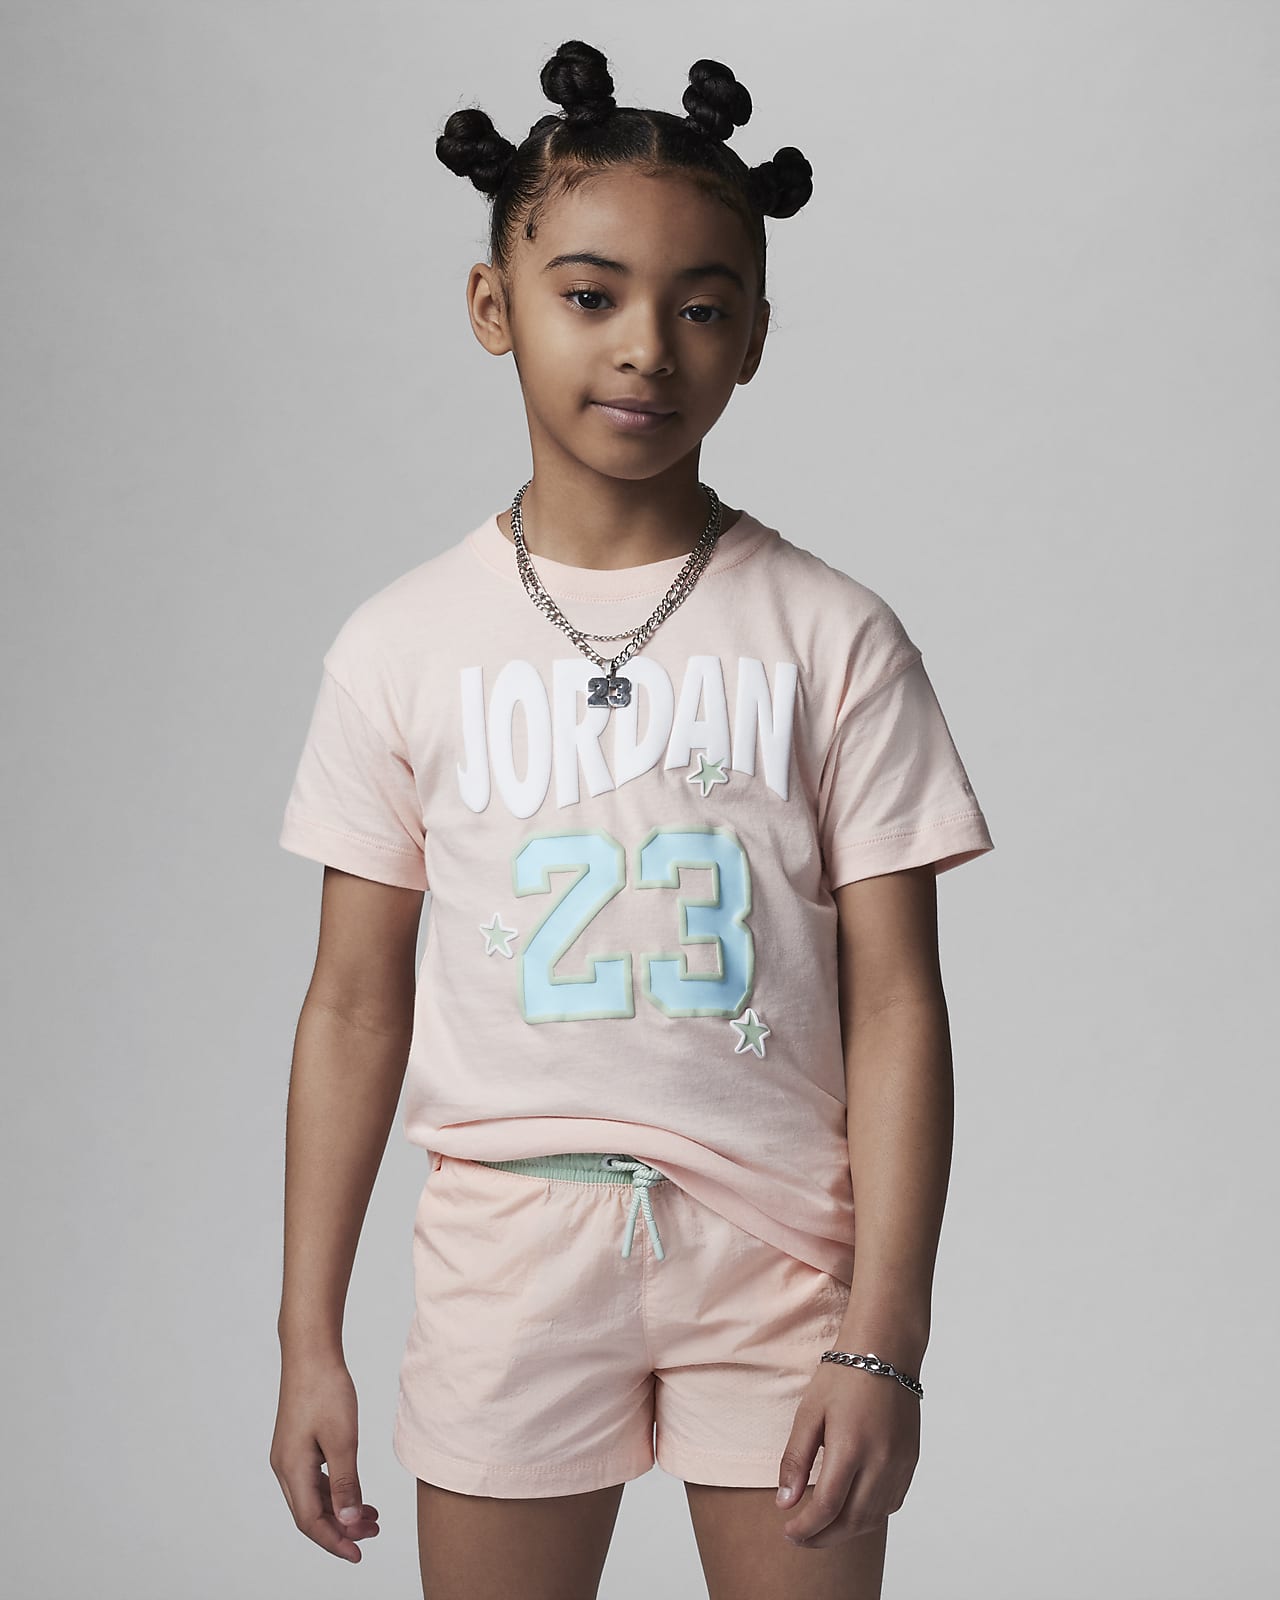 Jordan Icon Play Team Tee Little Kids' T-Shirt